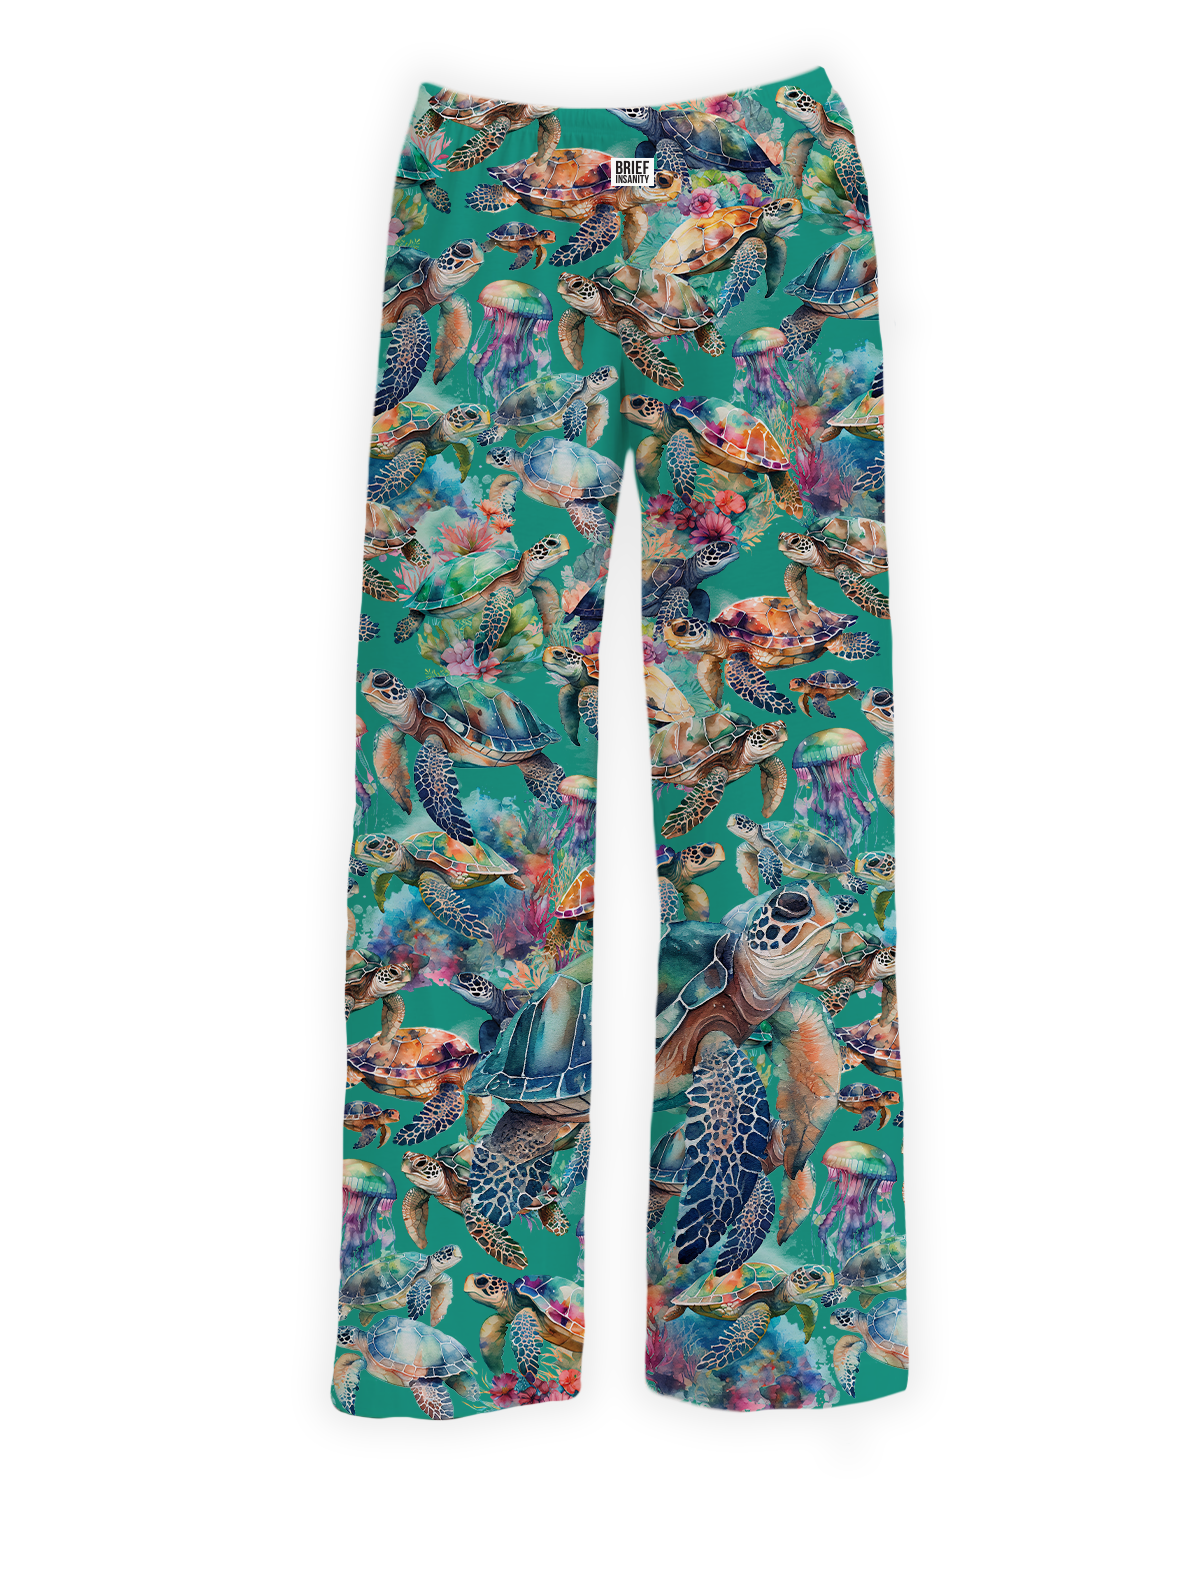 BRIEF INSANITY's Vibrant Sea Turtle Pajama Lounge Pants